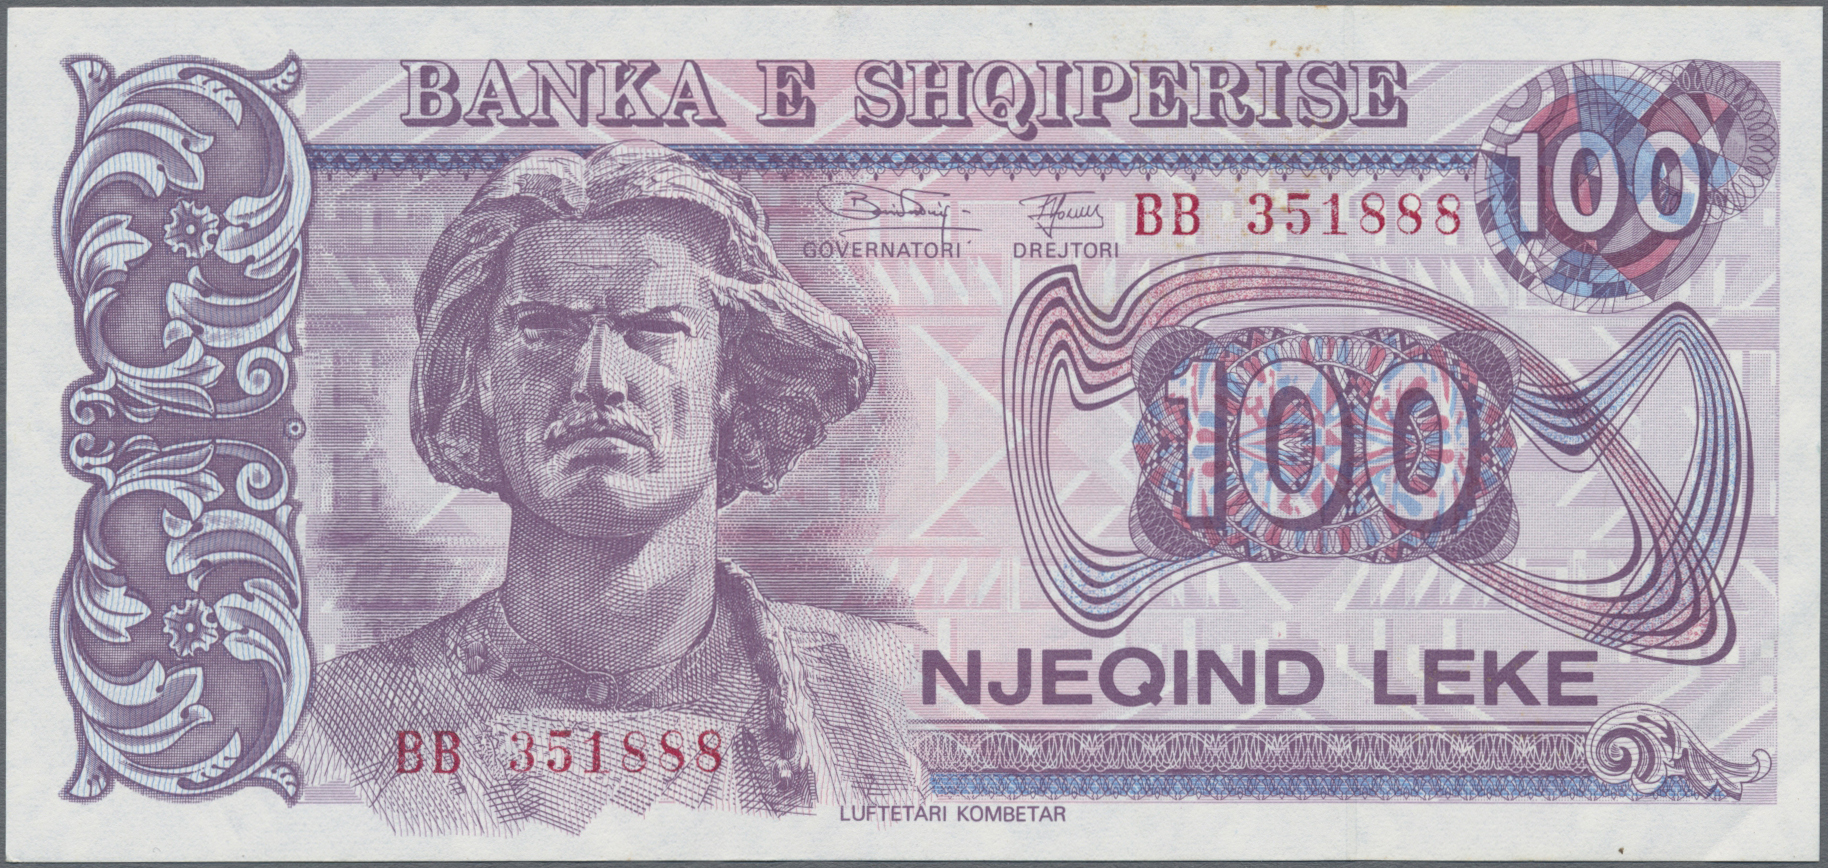 Lot 00010 - Albania / Albanien | Banknoten  -  Auktionshaus Christoph Gärtner GmbH & Co. KG 55th AUCTION - Day 1